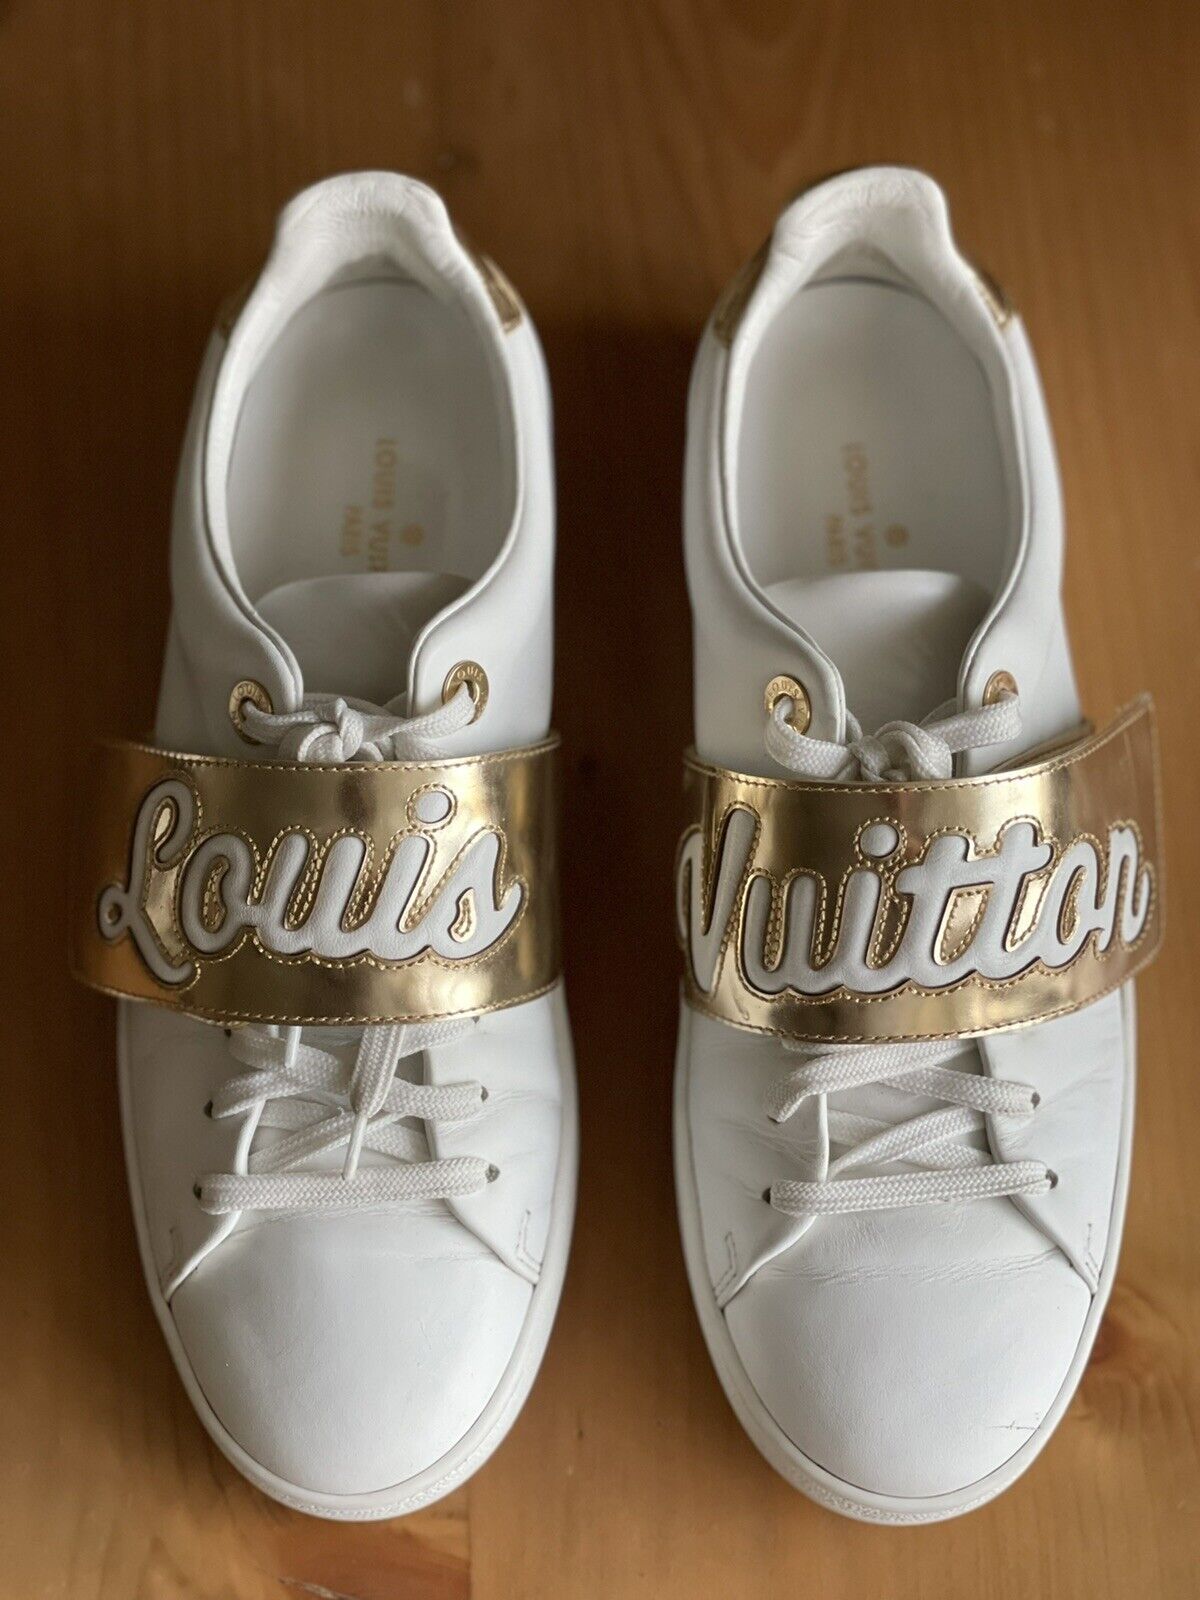 white louis vuitton shoes